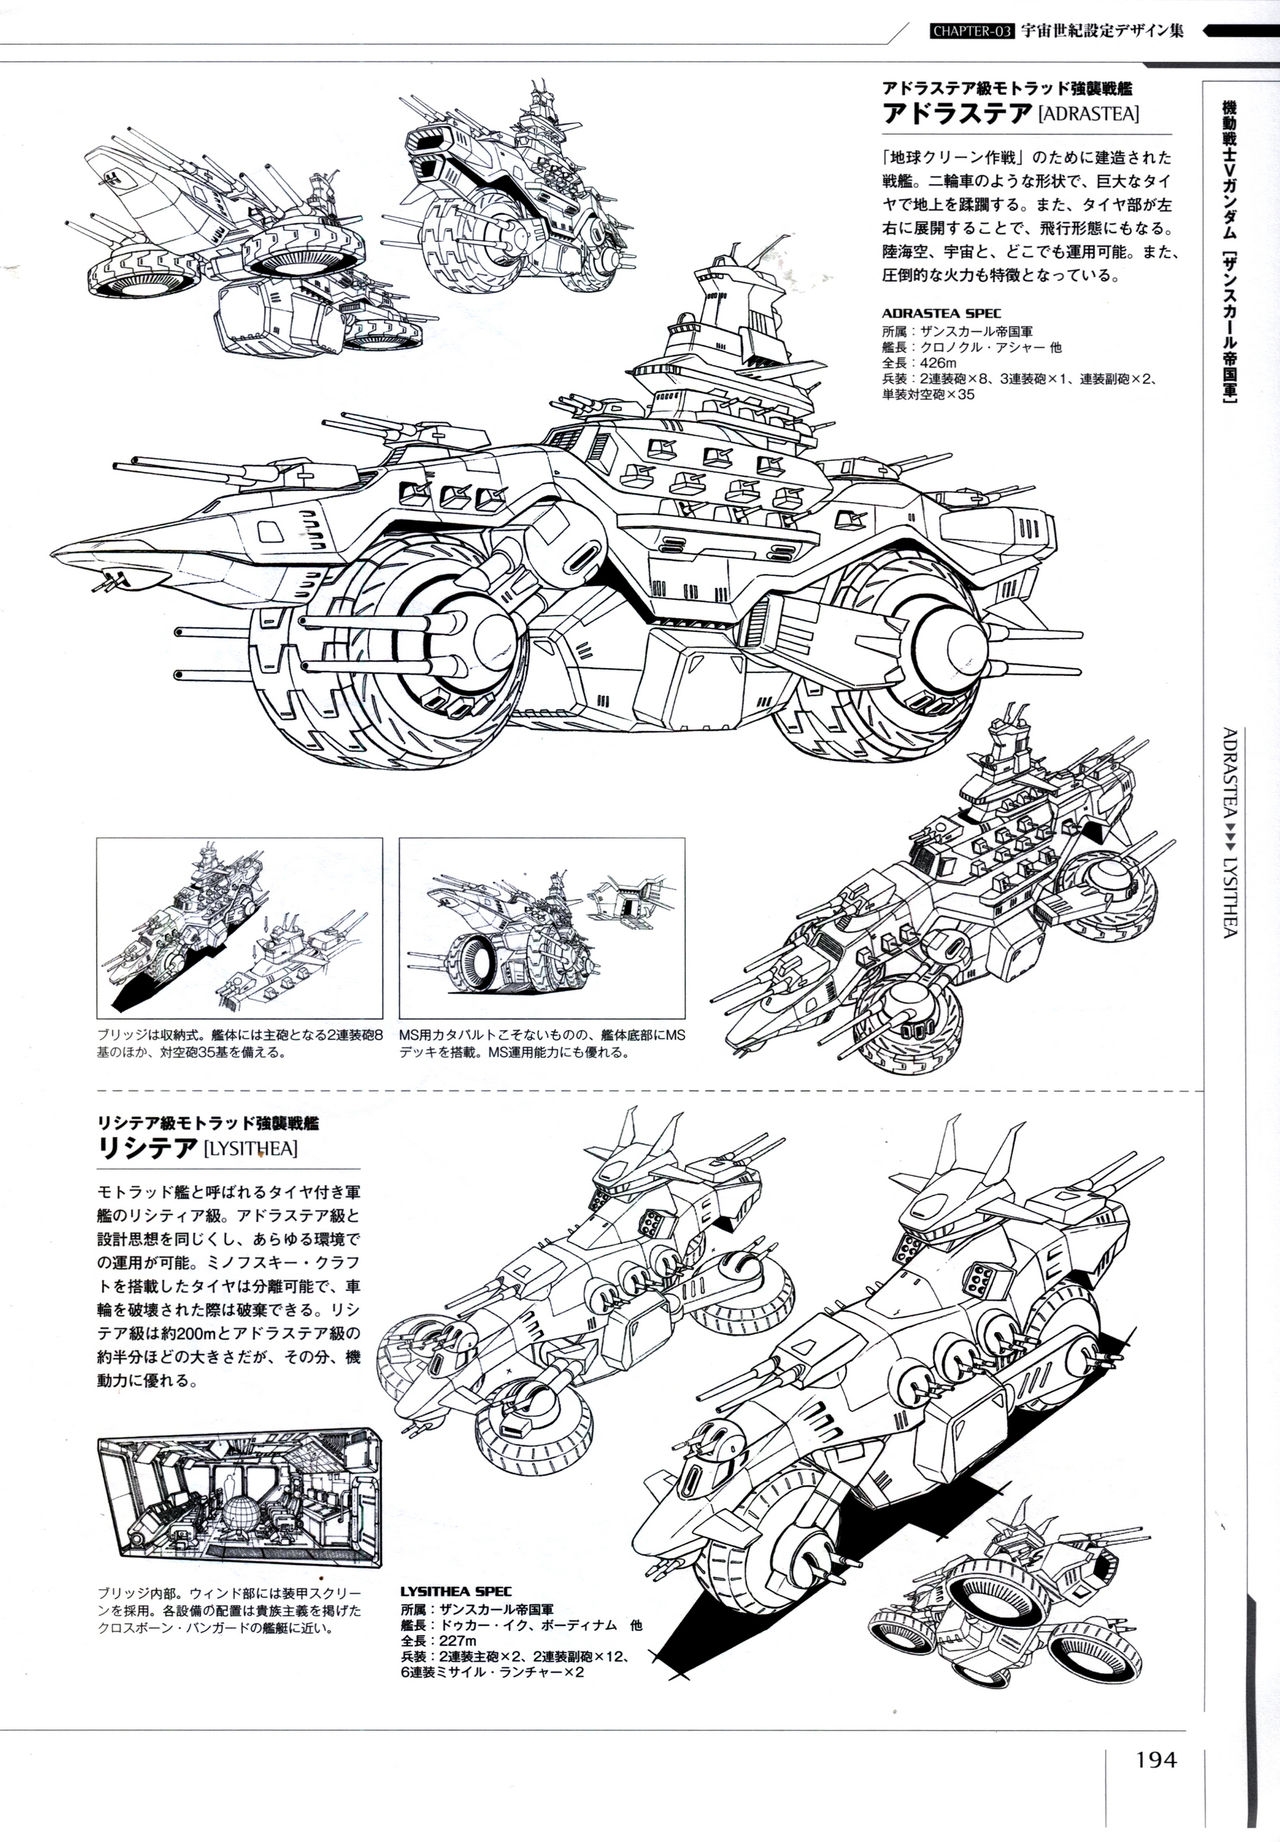 Mobile Suit Gundam - Ship & Aerospace Plane Encyclopedia - Revised Edition 199